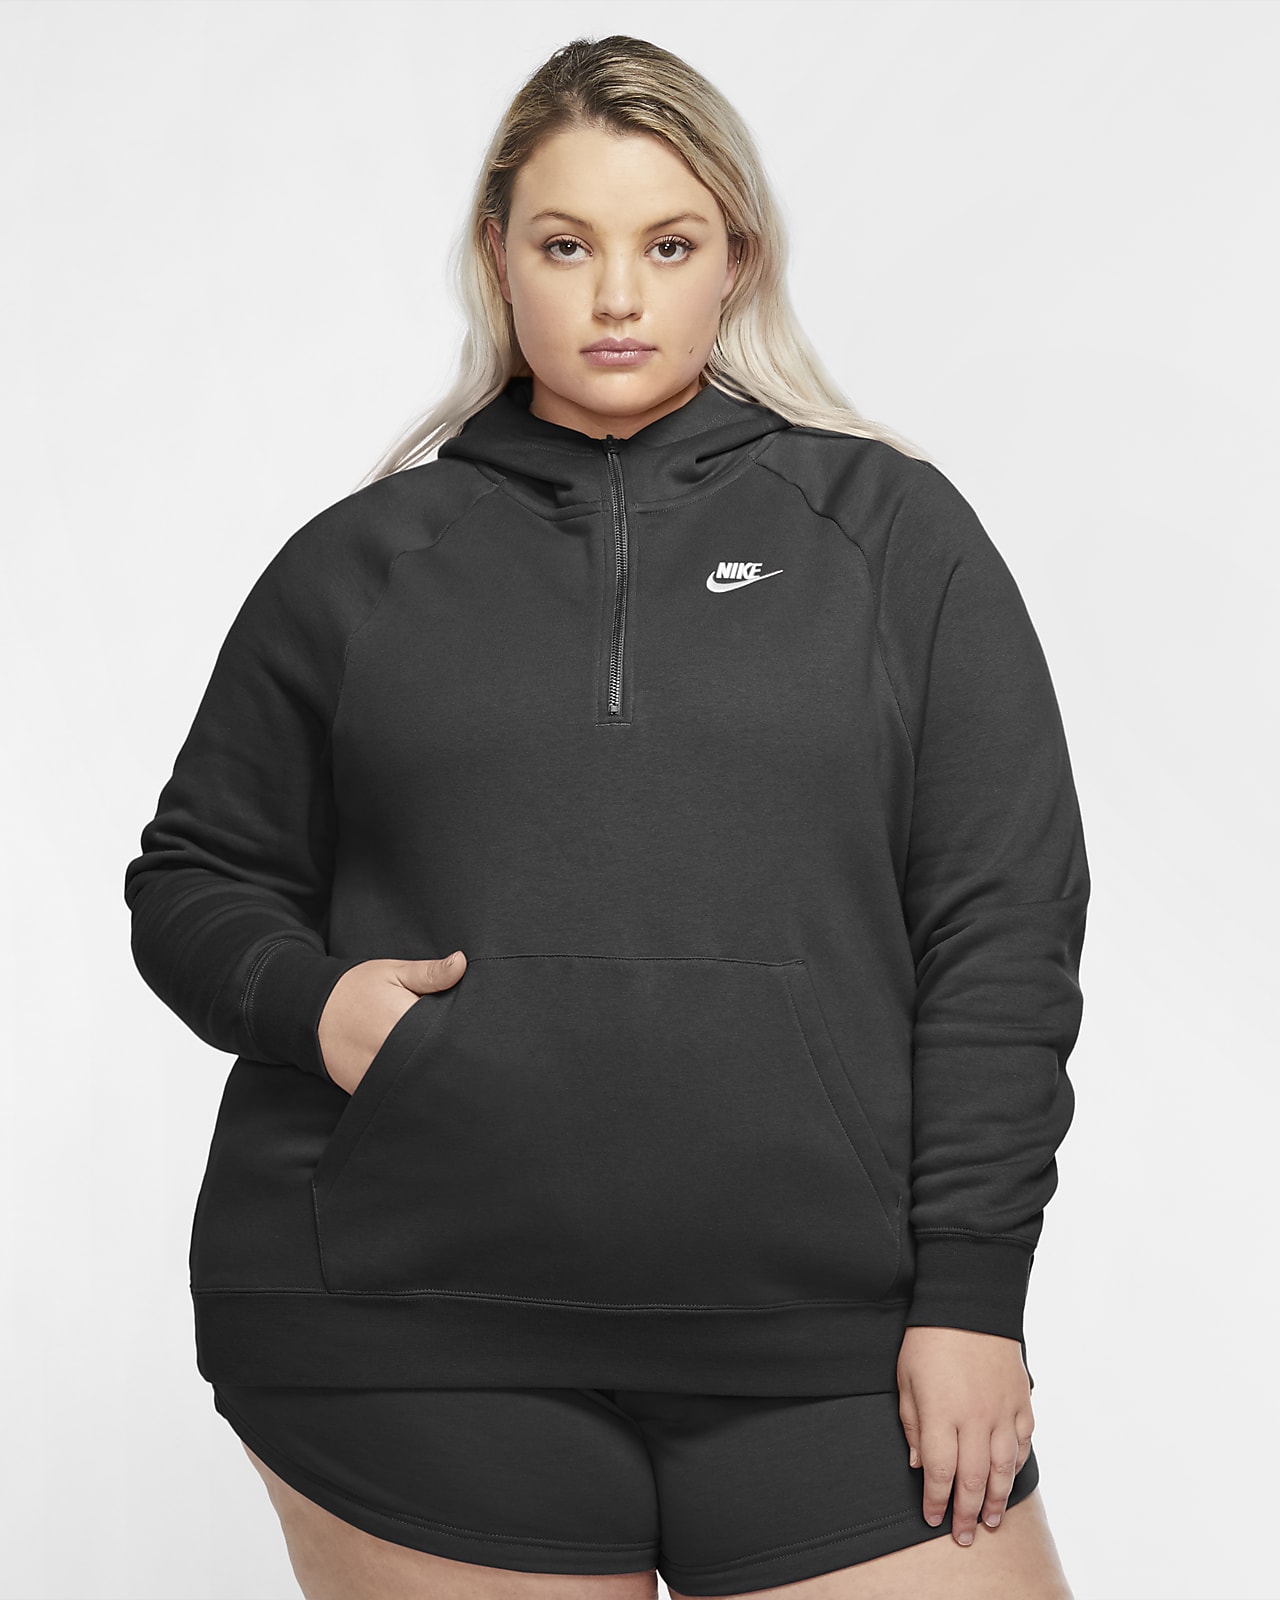 Nike Sportswear Essential Women's 1/4-Zip Hoodie (Plus Size). Nike.com